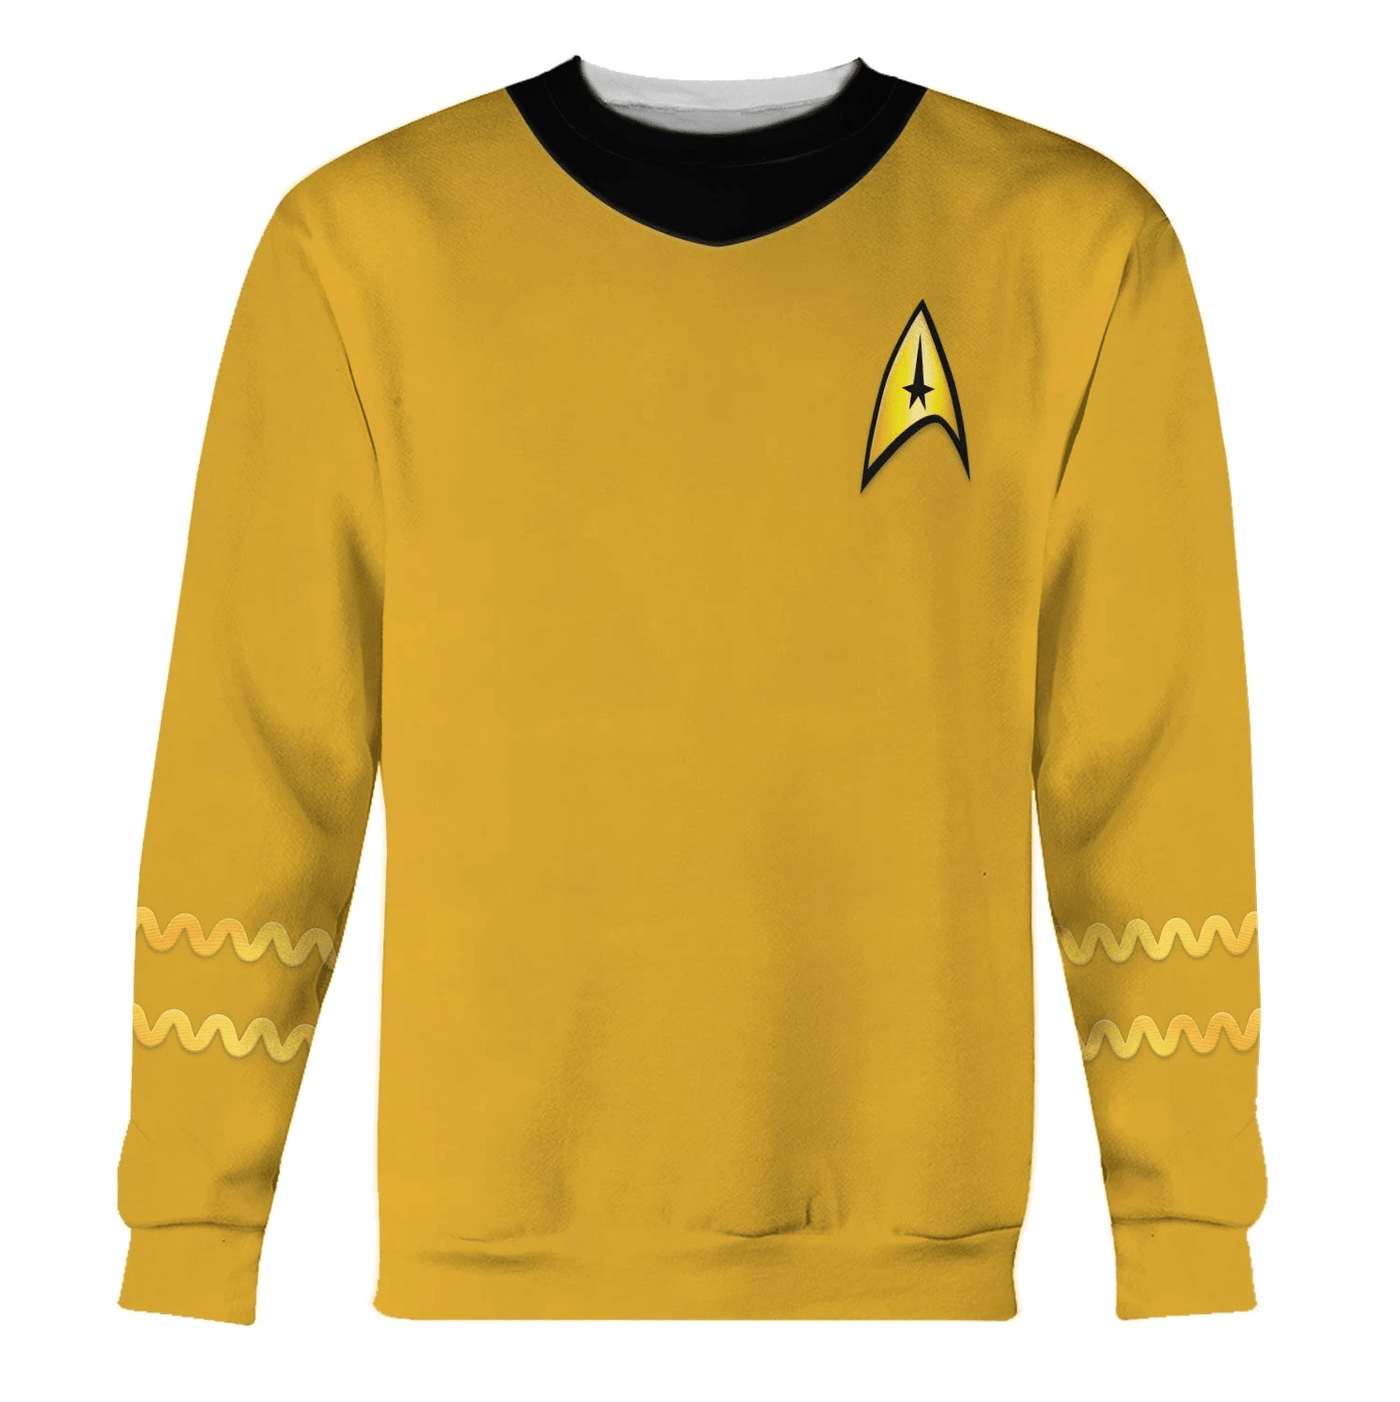 Star Trek The Original Series Yellow Cool - Sweater - Ugly Christmas Sweater